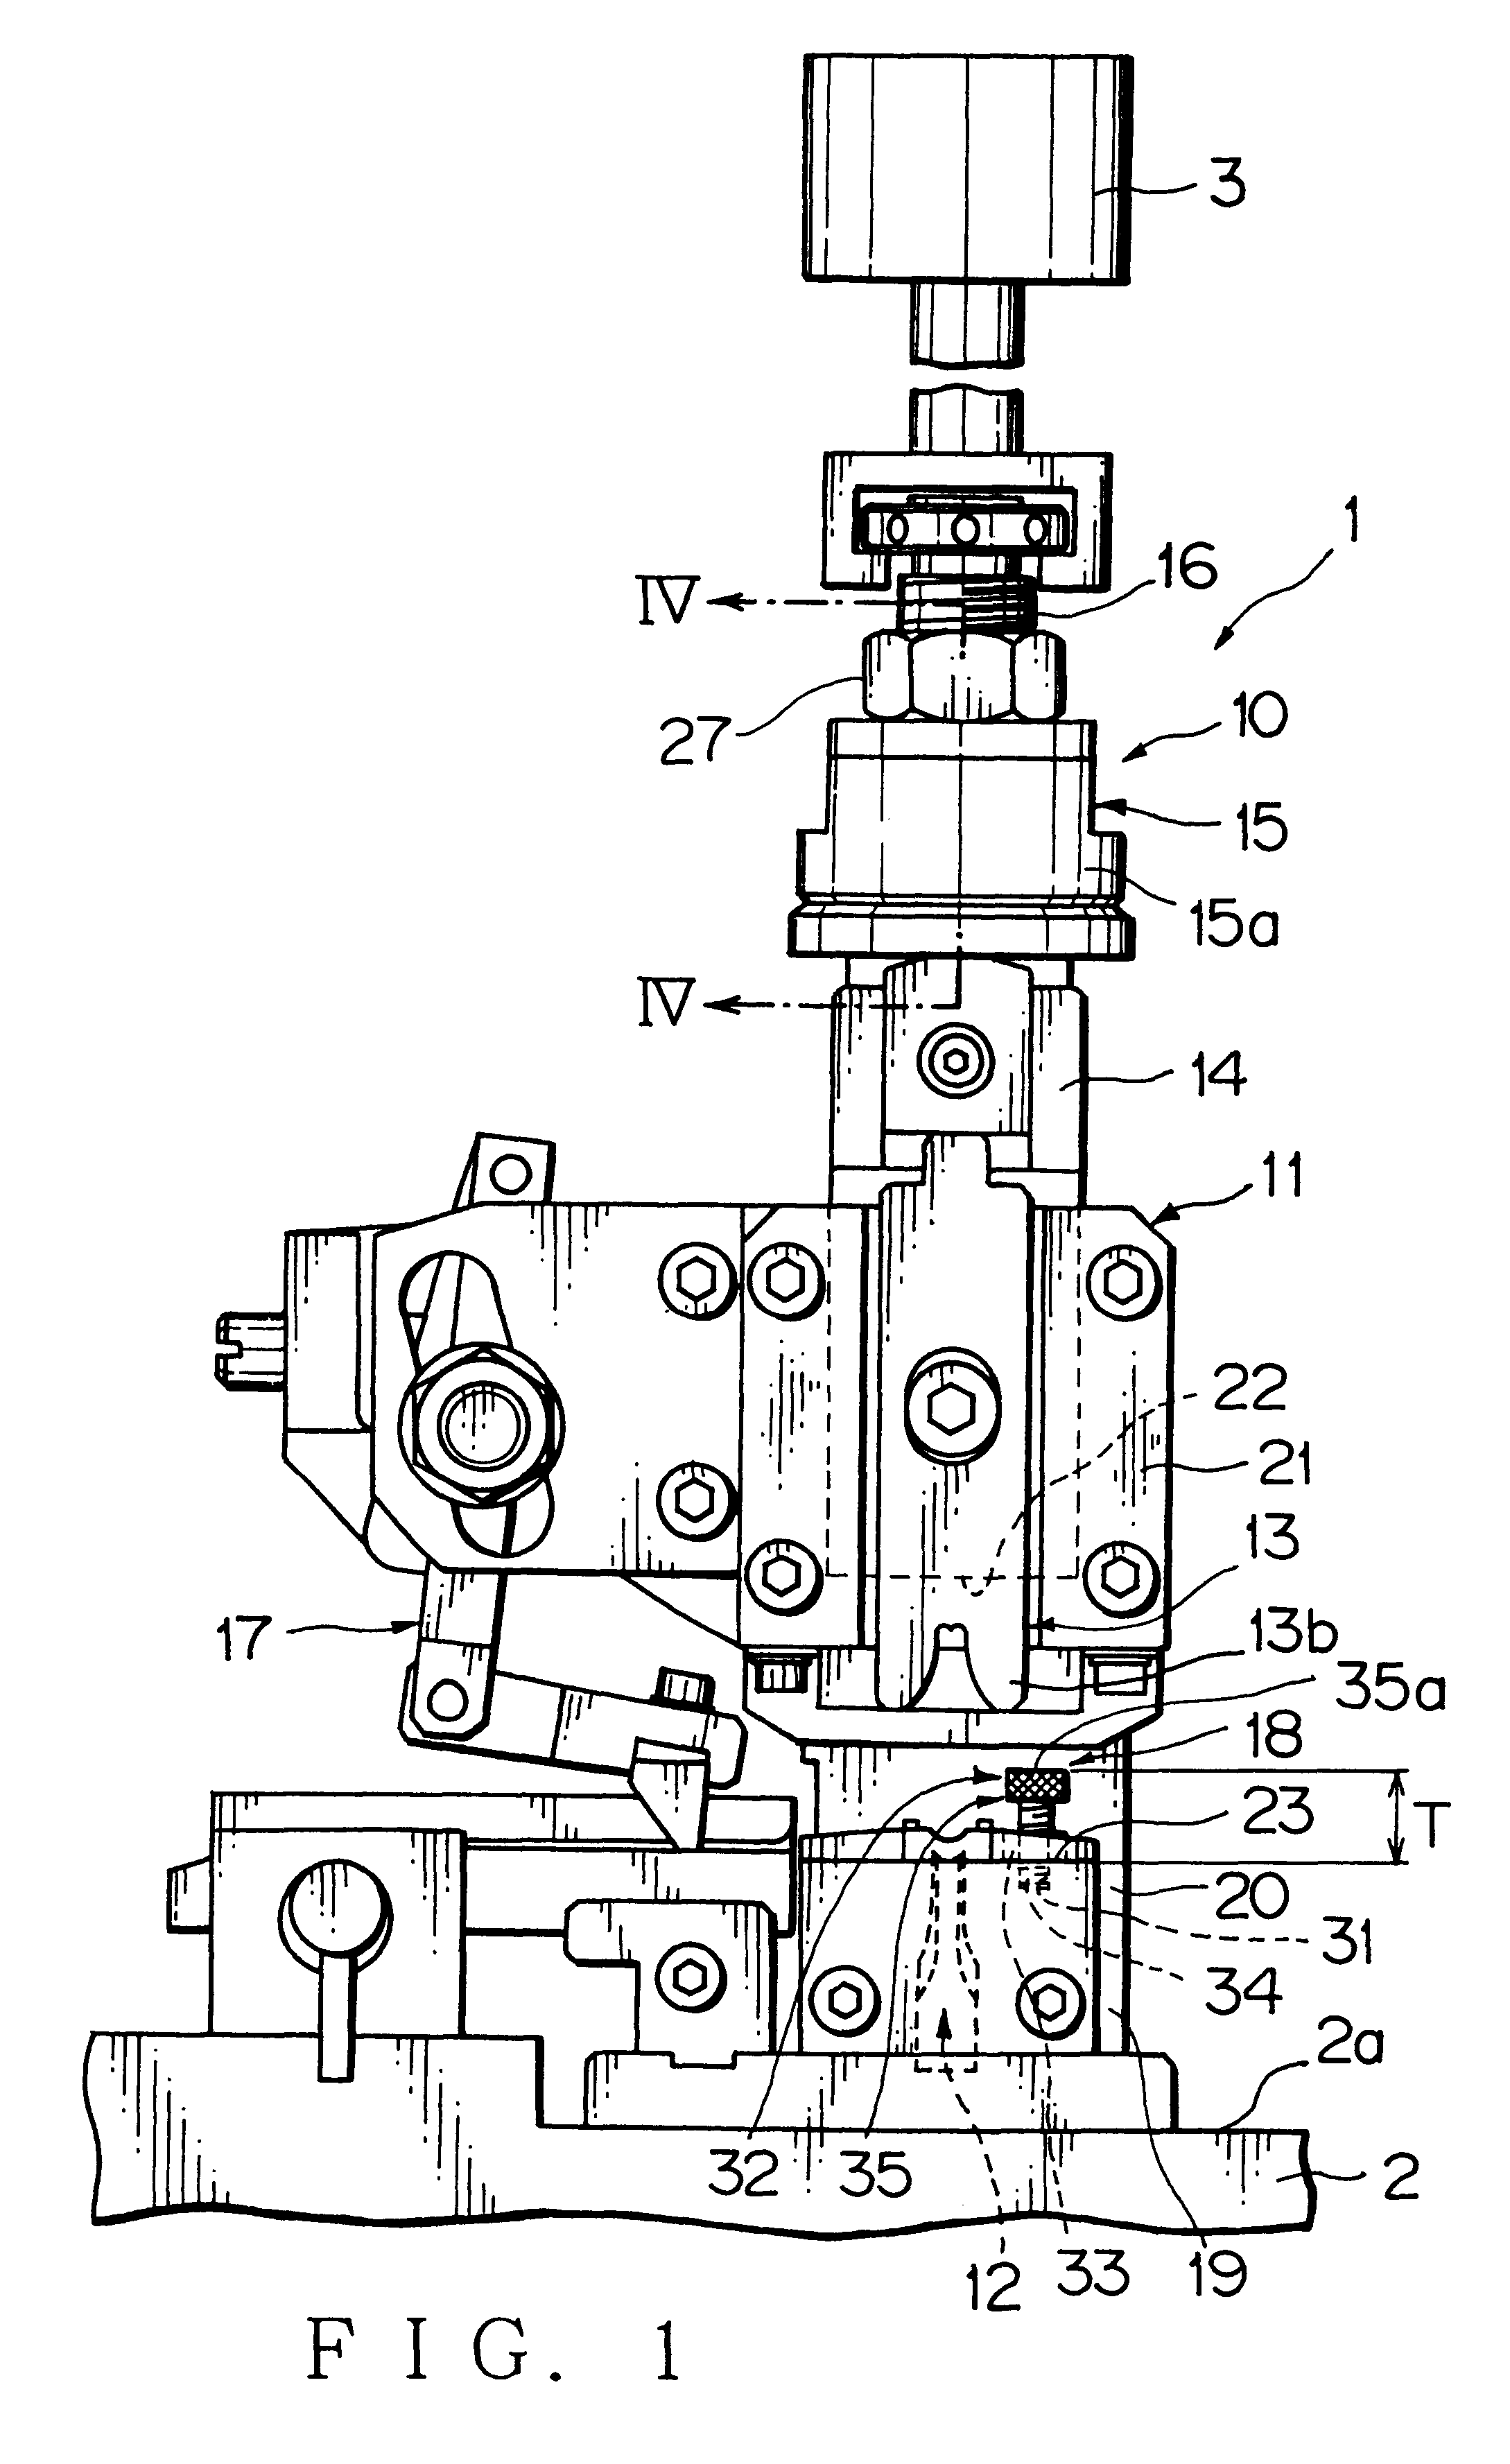 Terminal pressure-welding apparatus